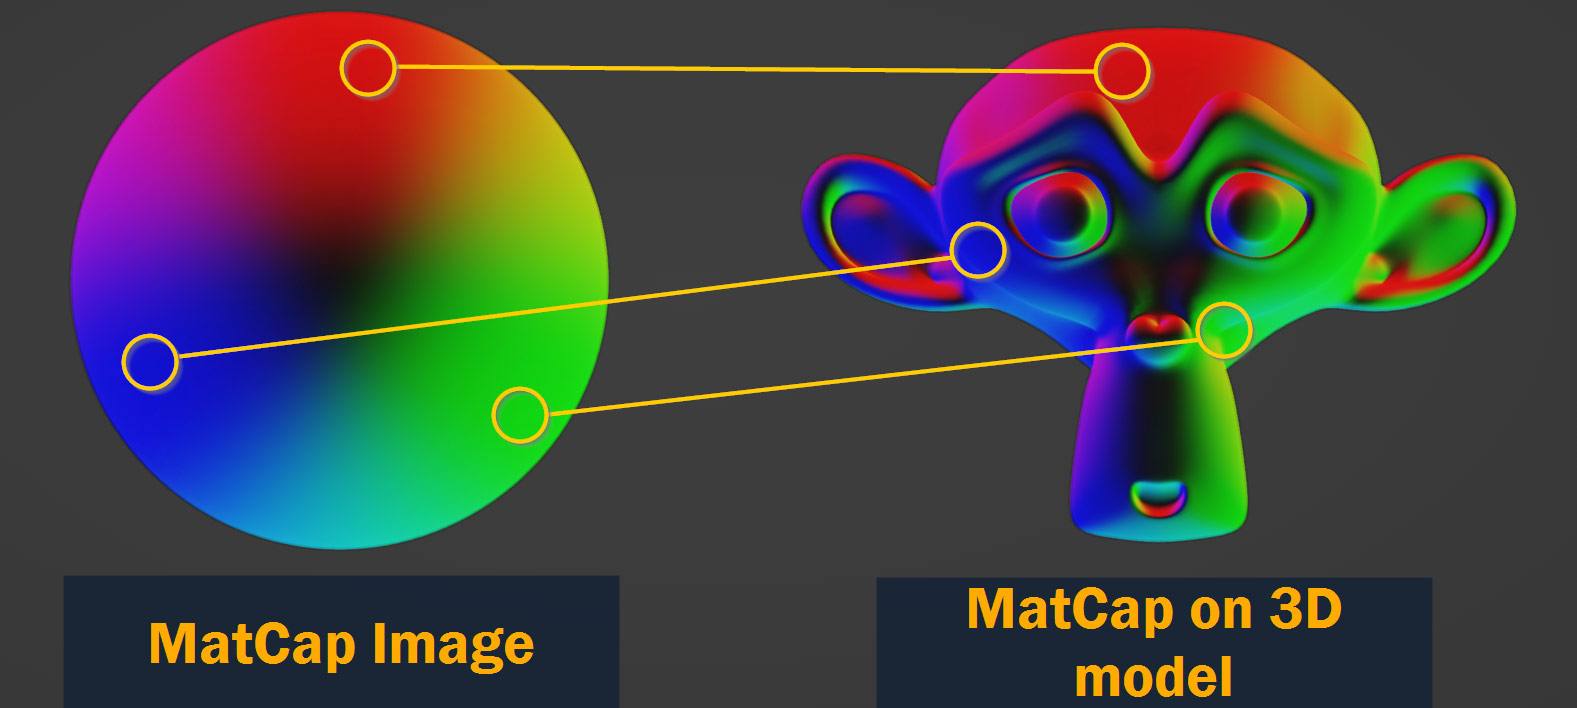 matcap image vs matcap on 3d-model